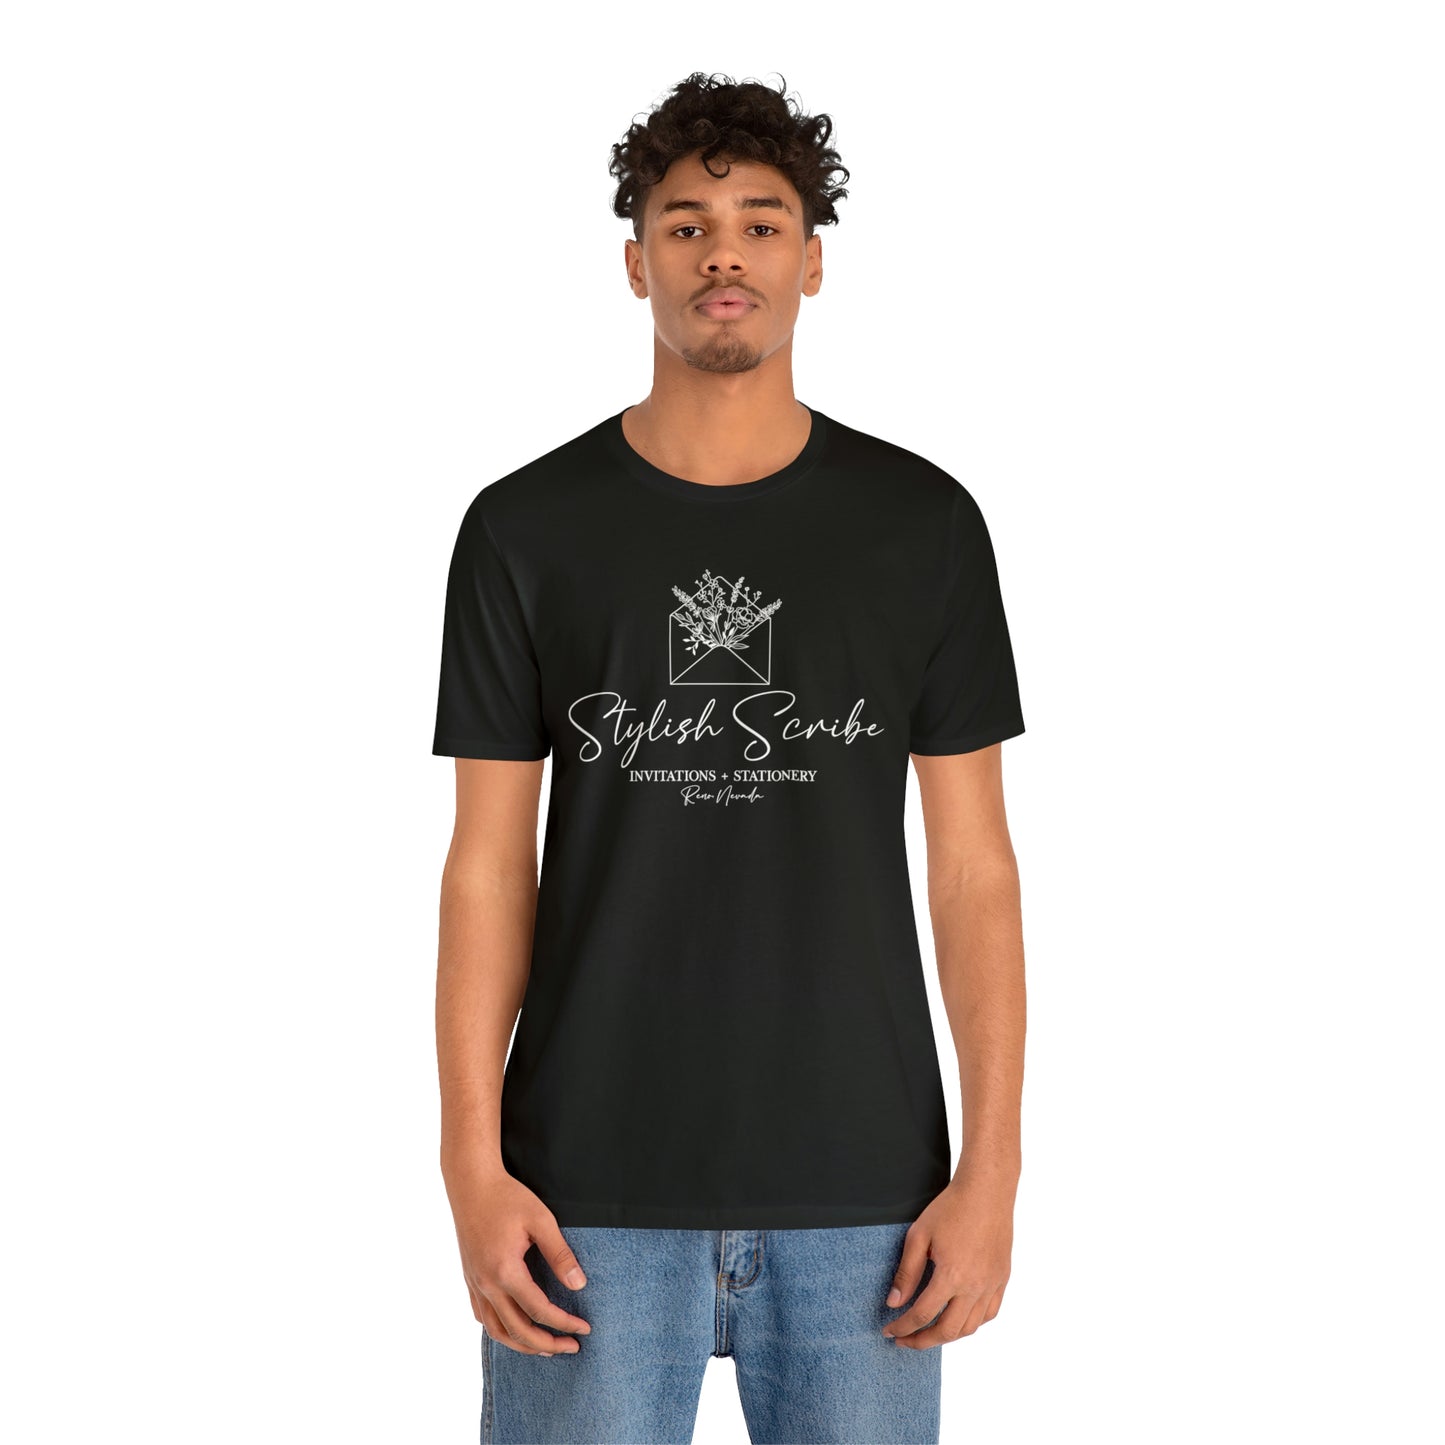 Stylish Scribe Black T-Shirt